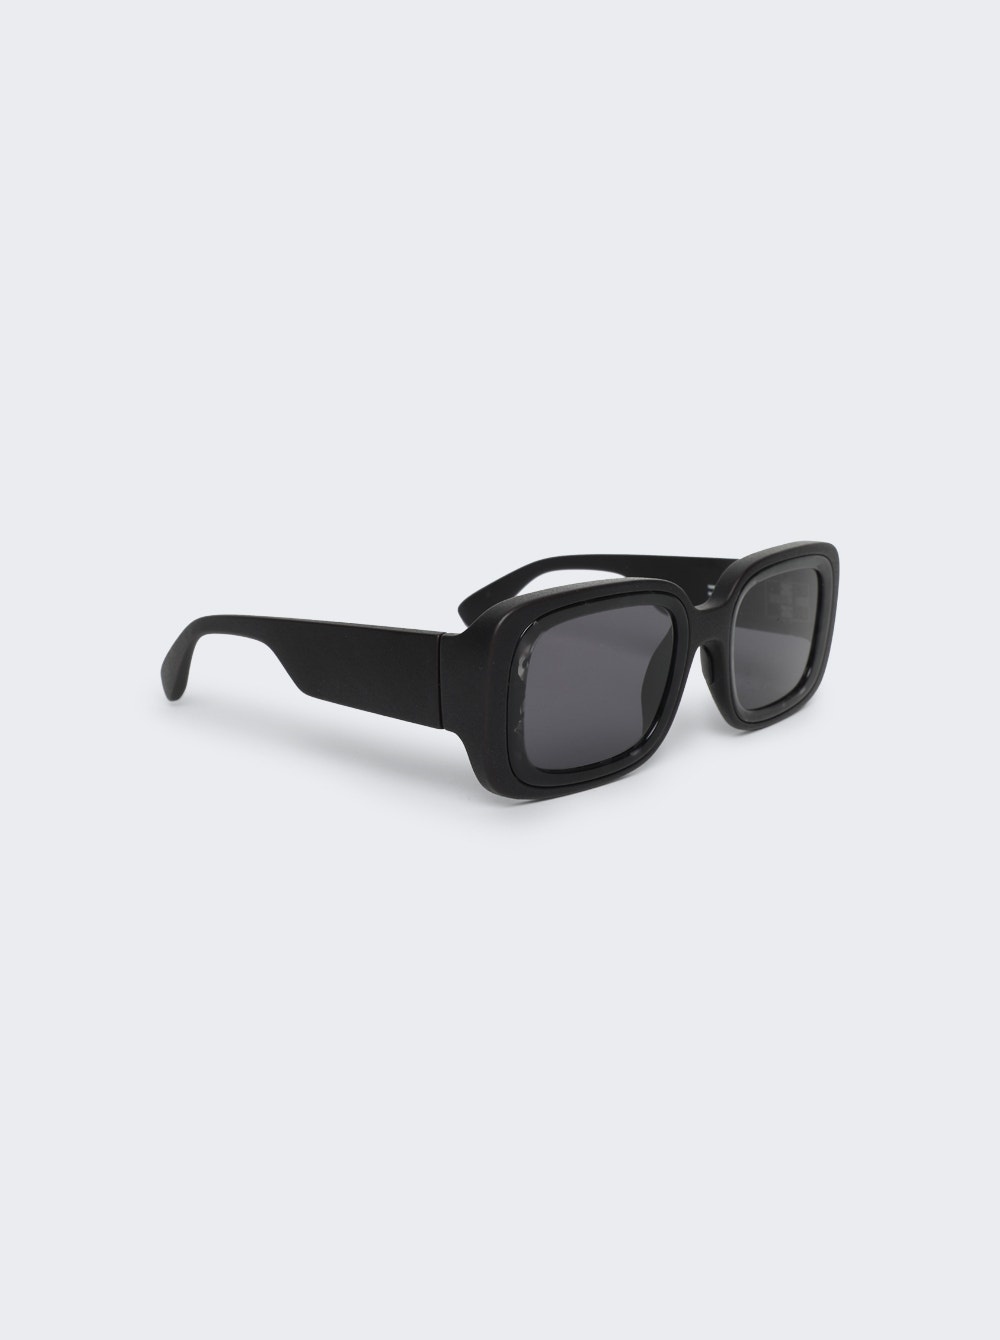 Studio 13.1 Sunglasses Pitch Black and Black Havana - 4